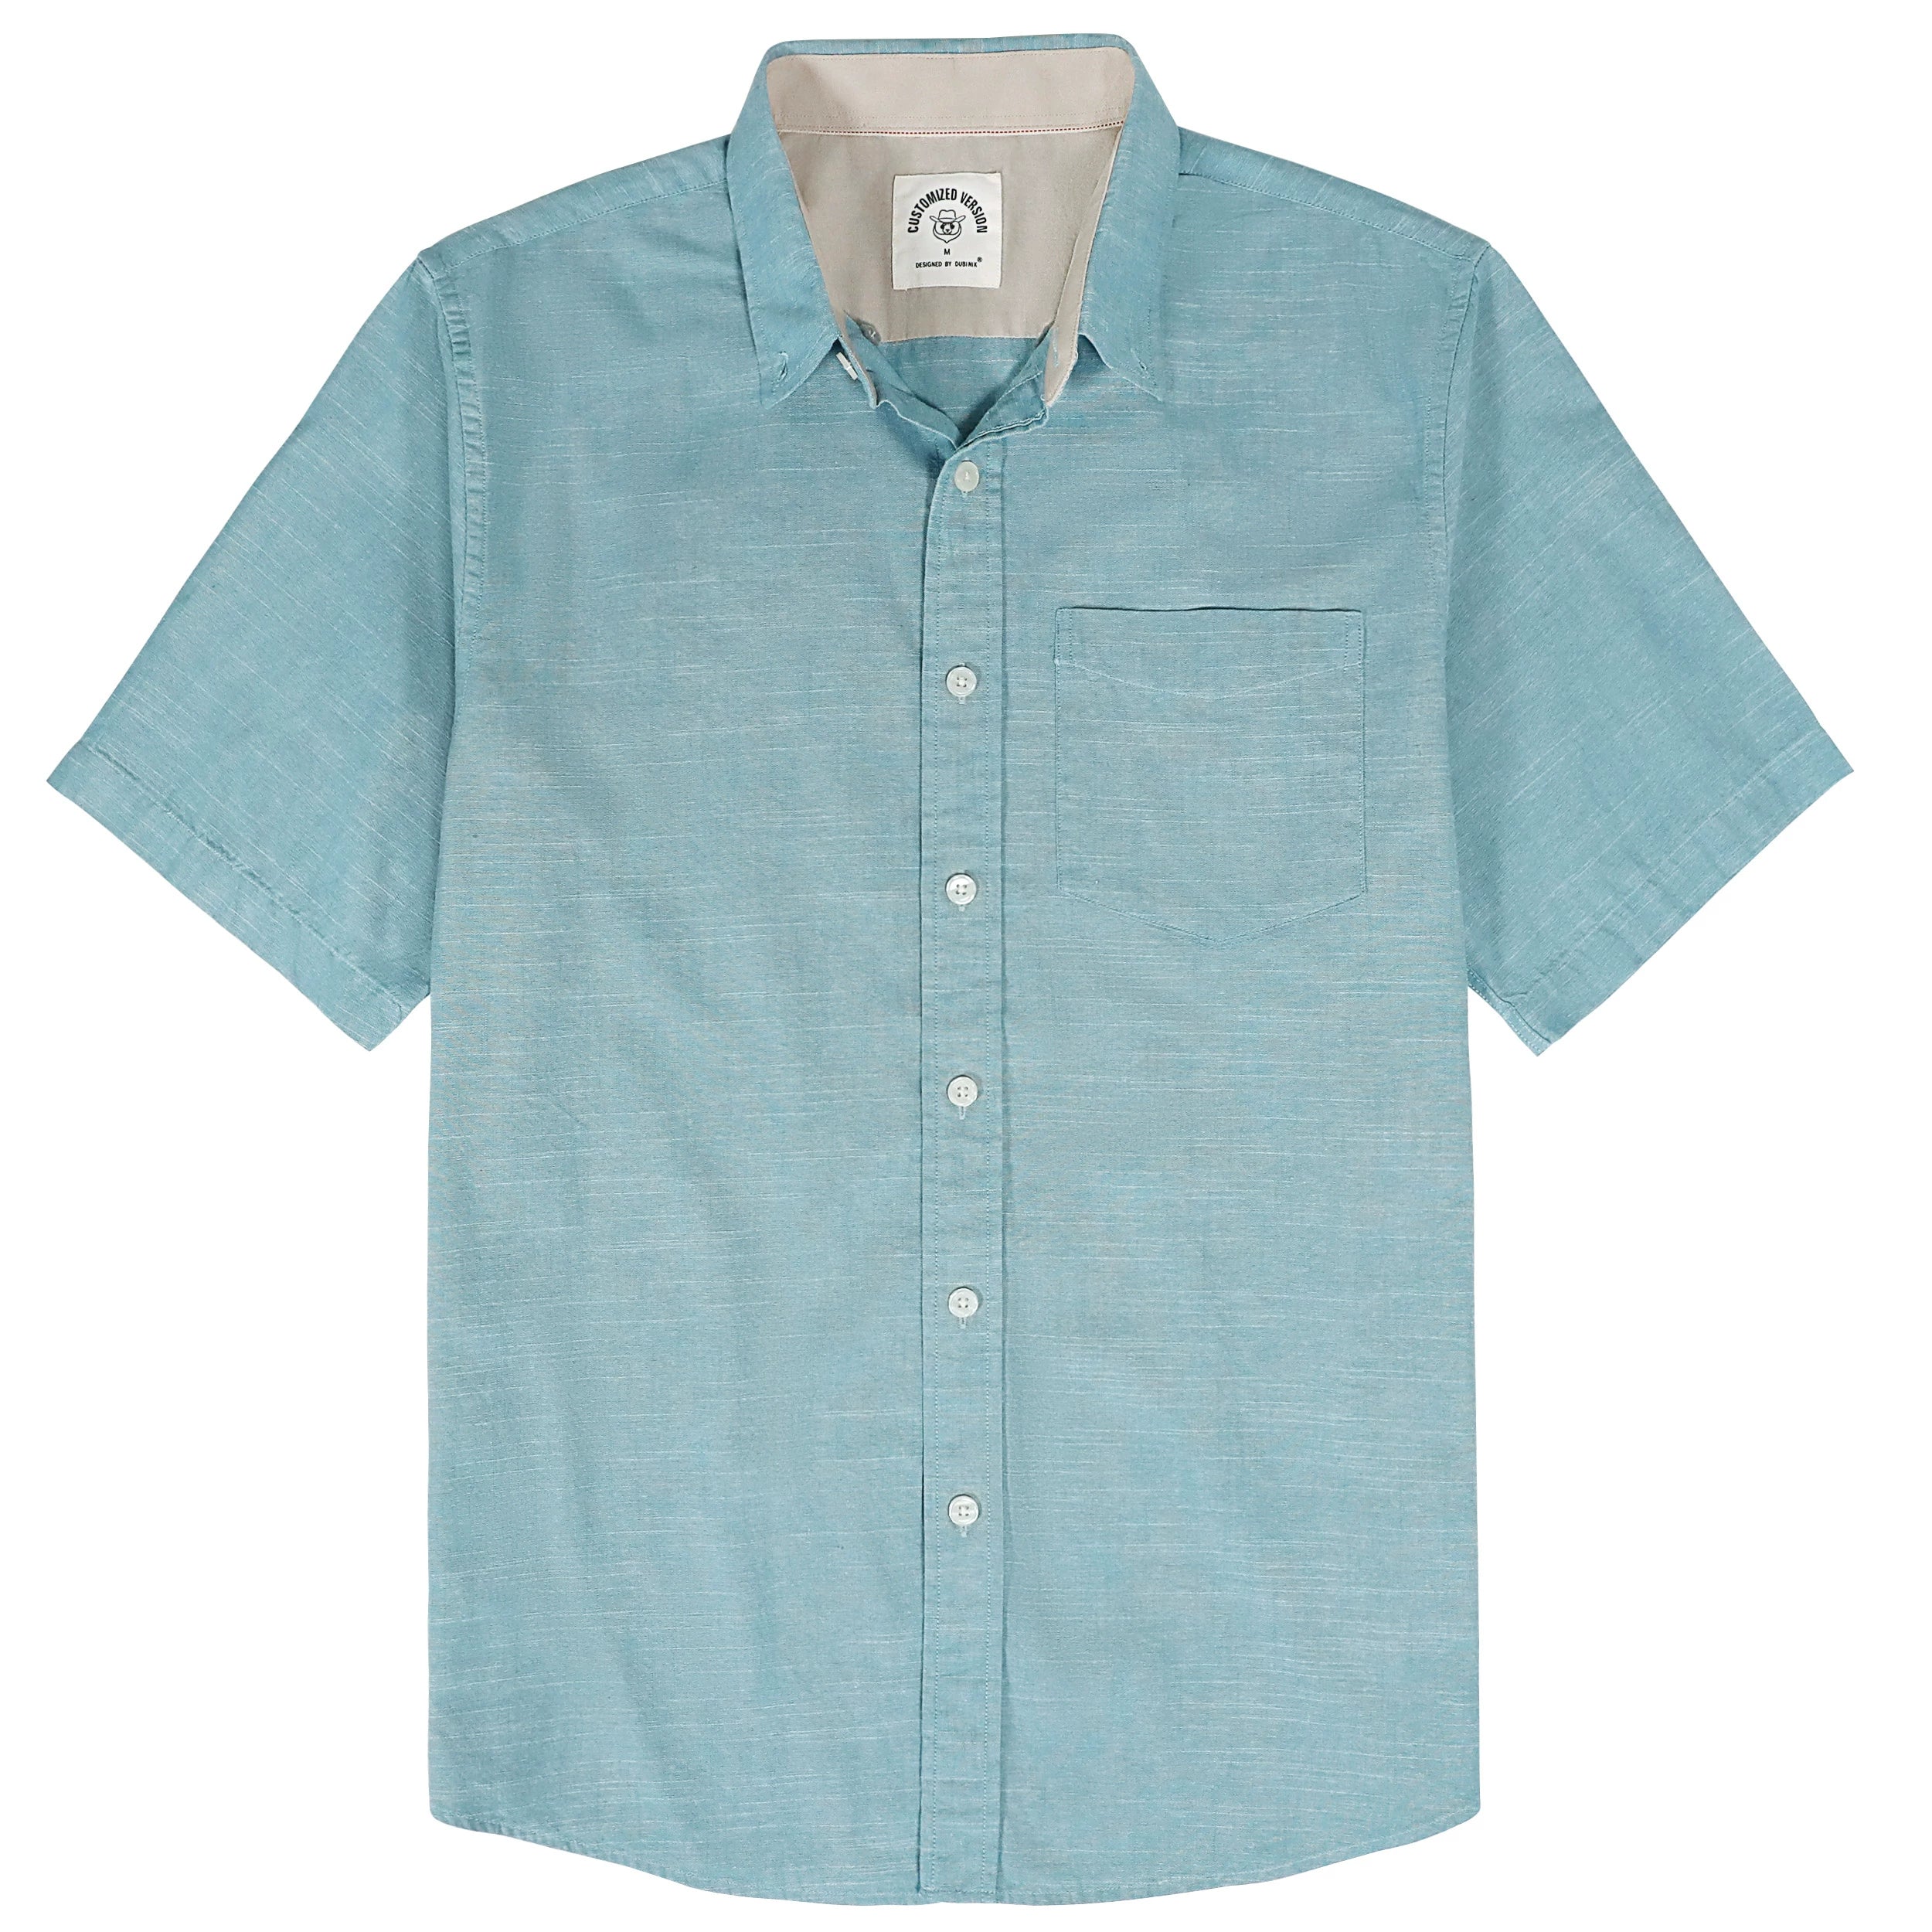 Dubinik® Mens Short Sleeve Button Down Shirts 100% Cotton Plaid Men's Casual Button-Down Shirts with Pocket#01055